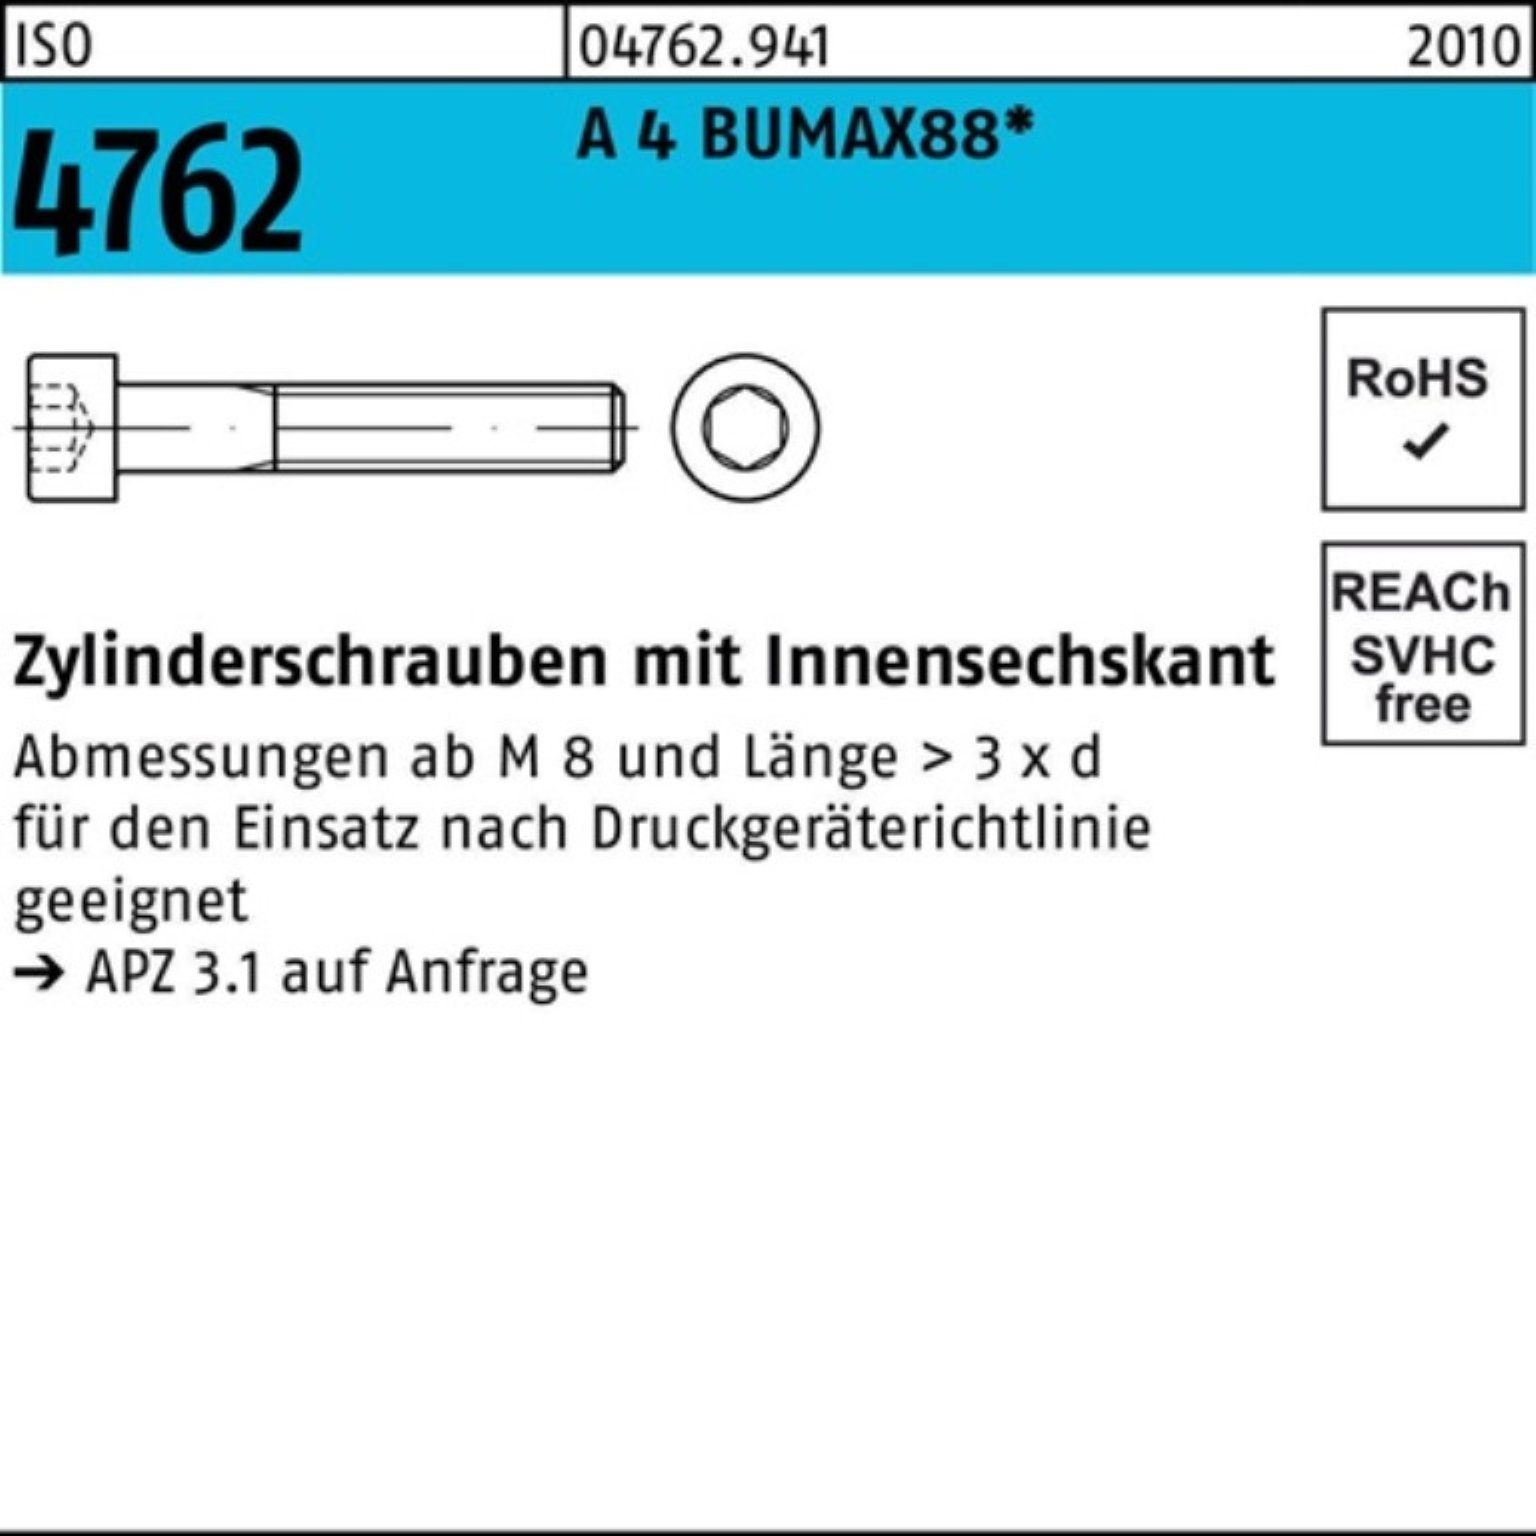 Bufab Zylinderschraube 100er Pack Zylinderschraube ISO 4762 Innen-6kt M6x 40 A 4 BUMAX88 100